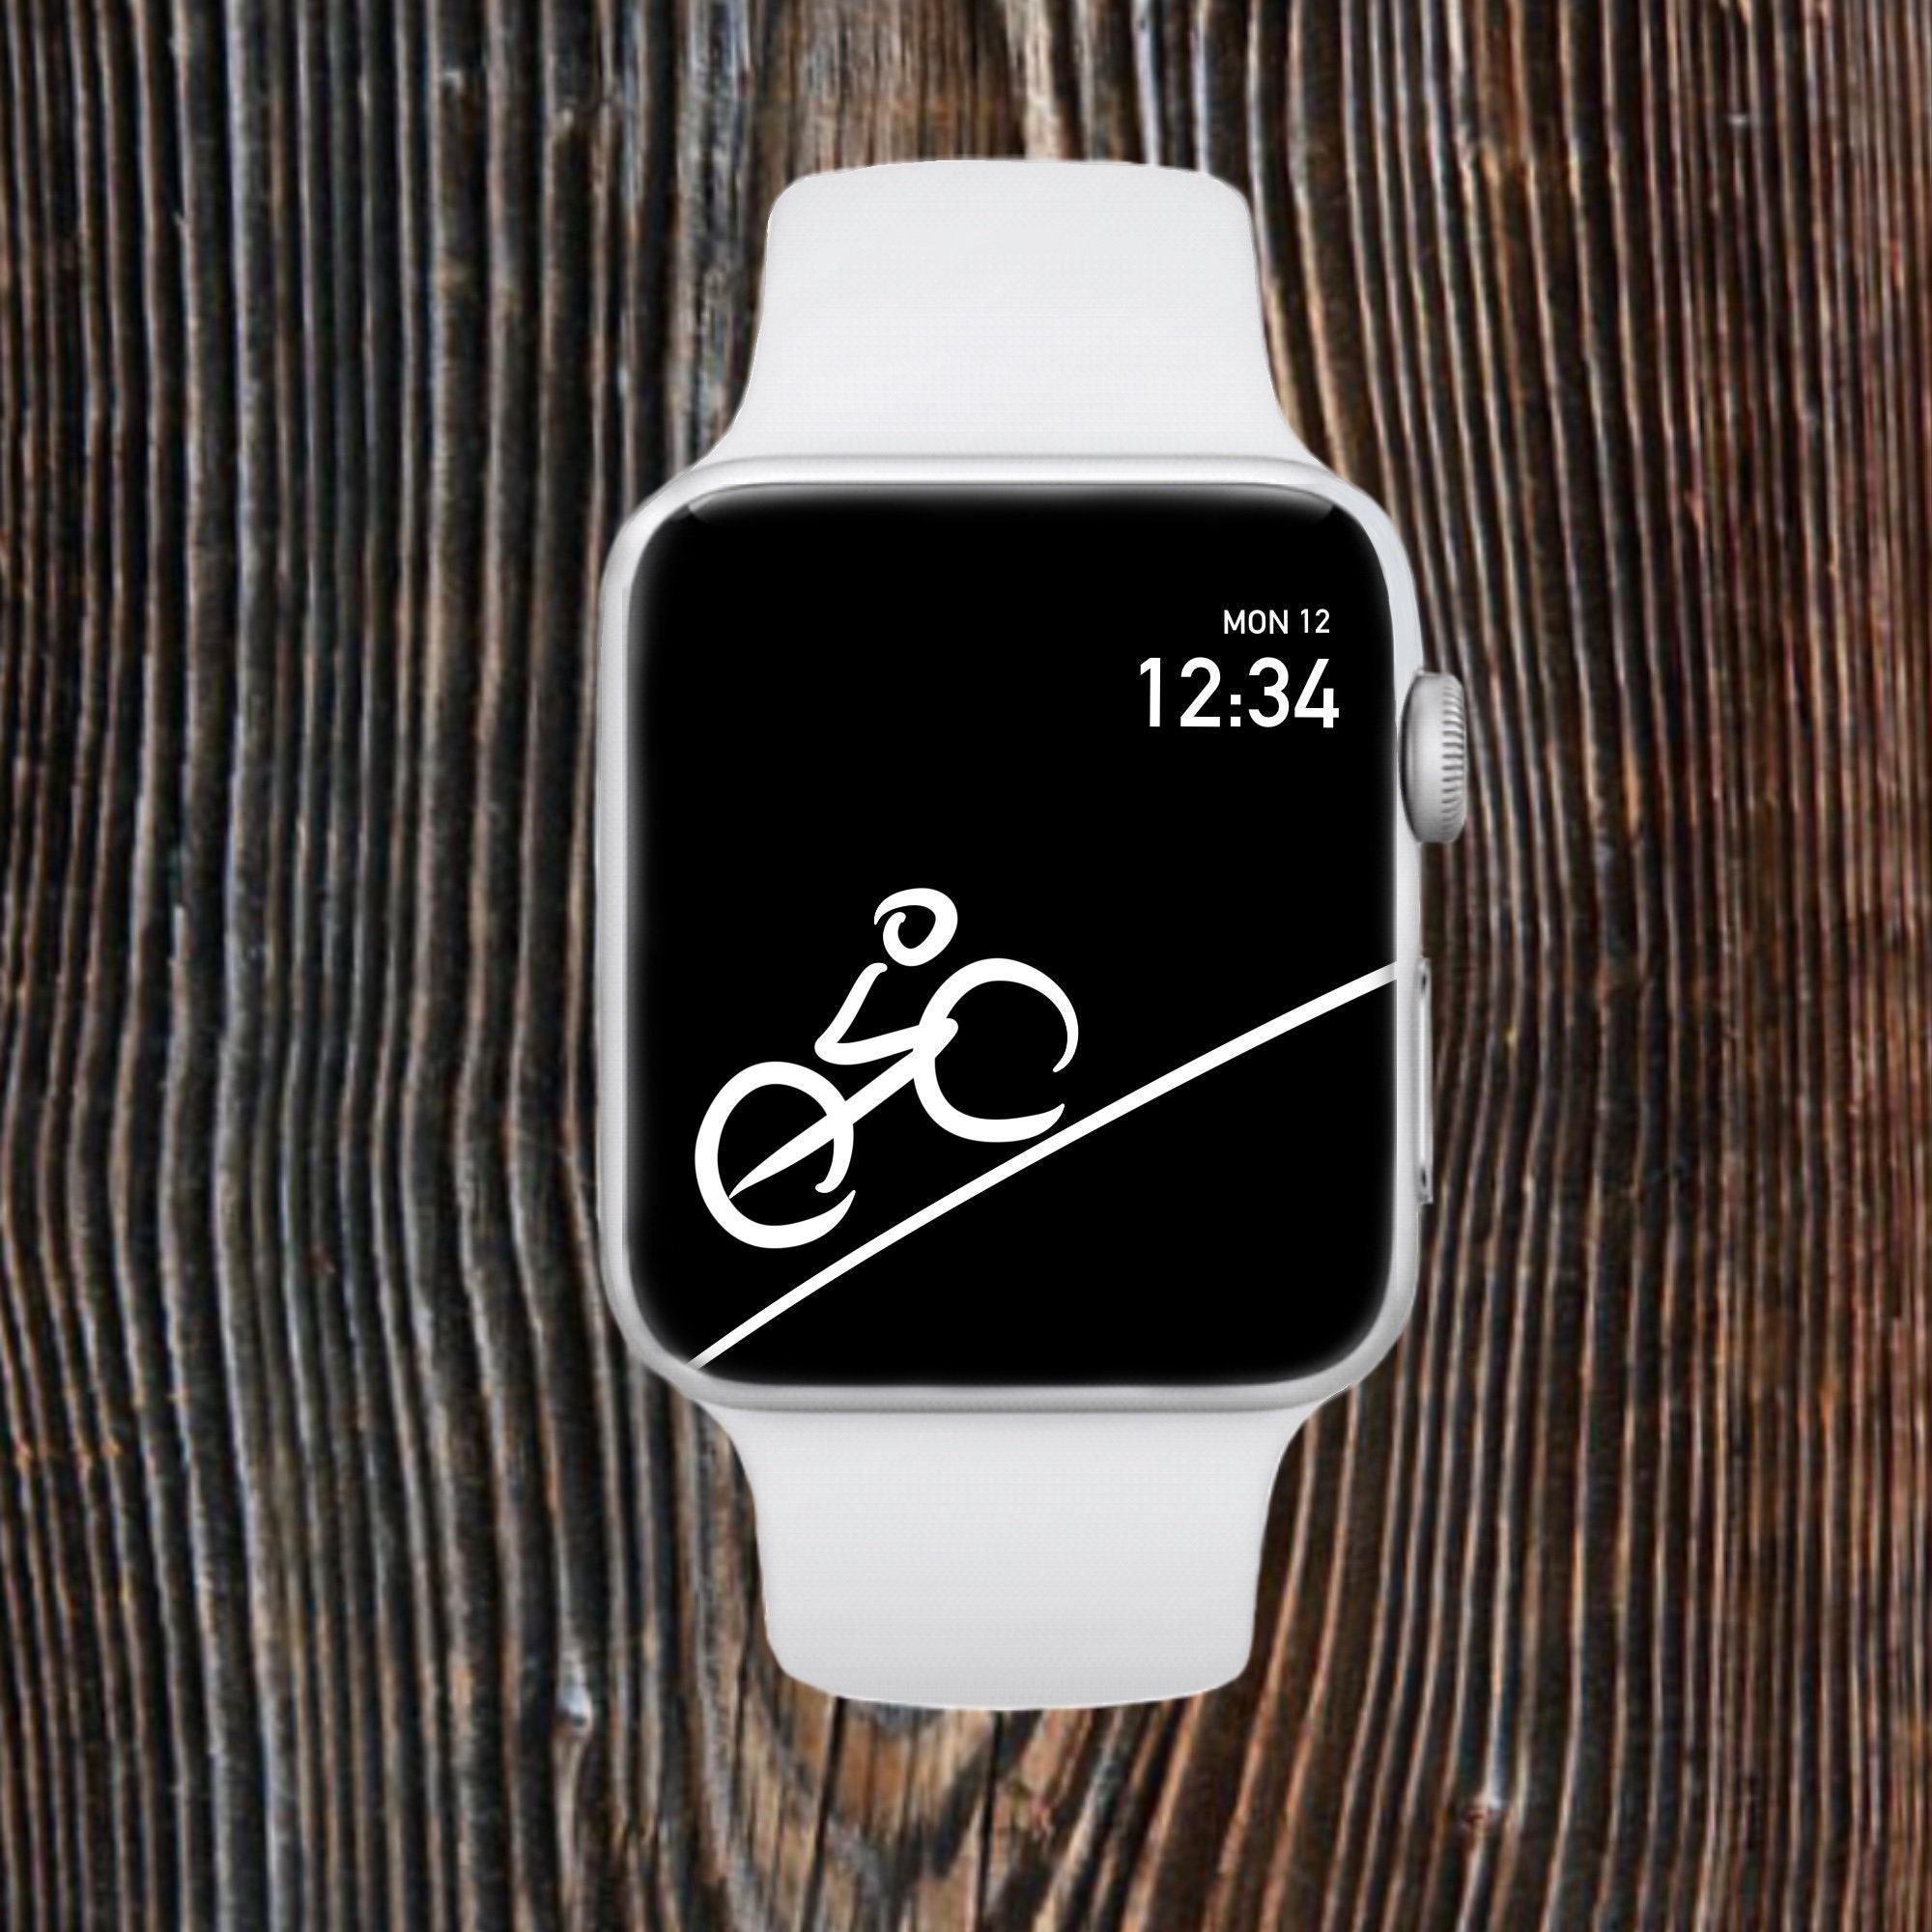 Apple Watch Wallpaper Watch Lock Screen Minimal Theme